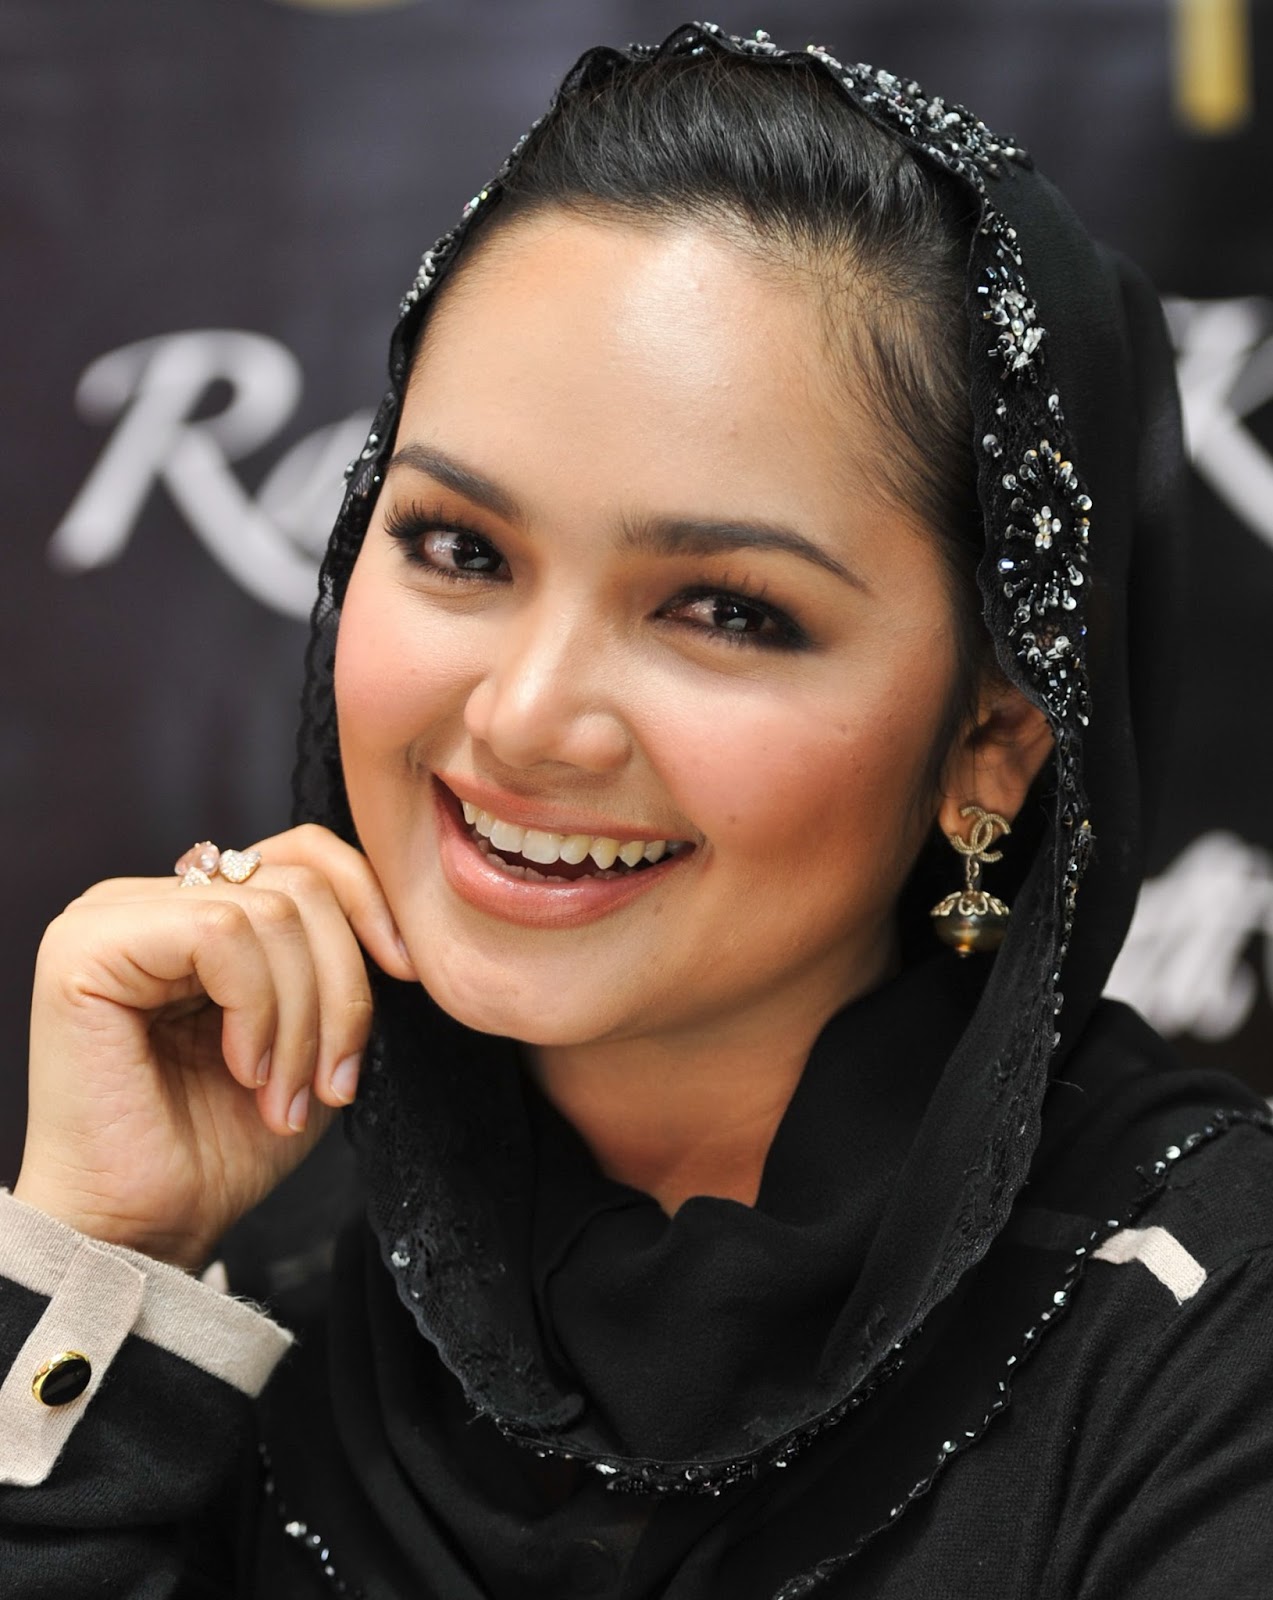  EDISI ARTIS Top 10 Penyanyi Wanita Malaysia Terbaik 